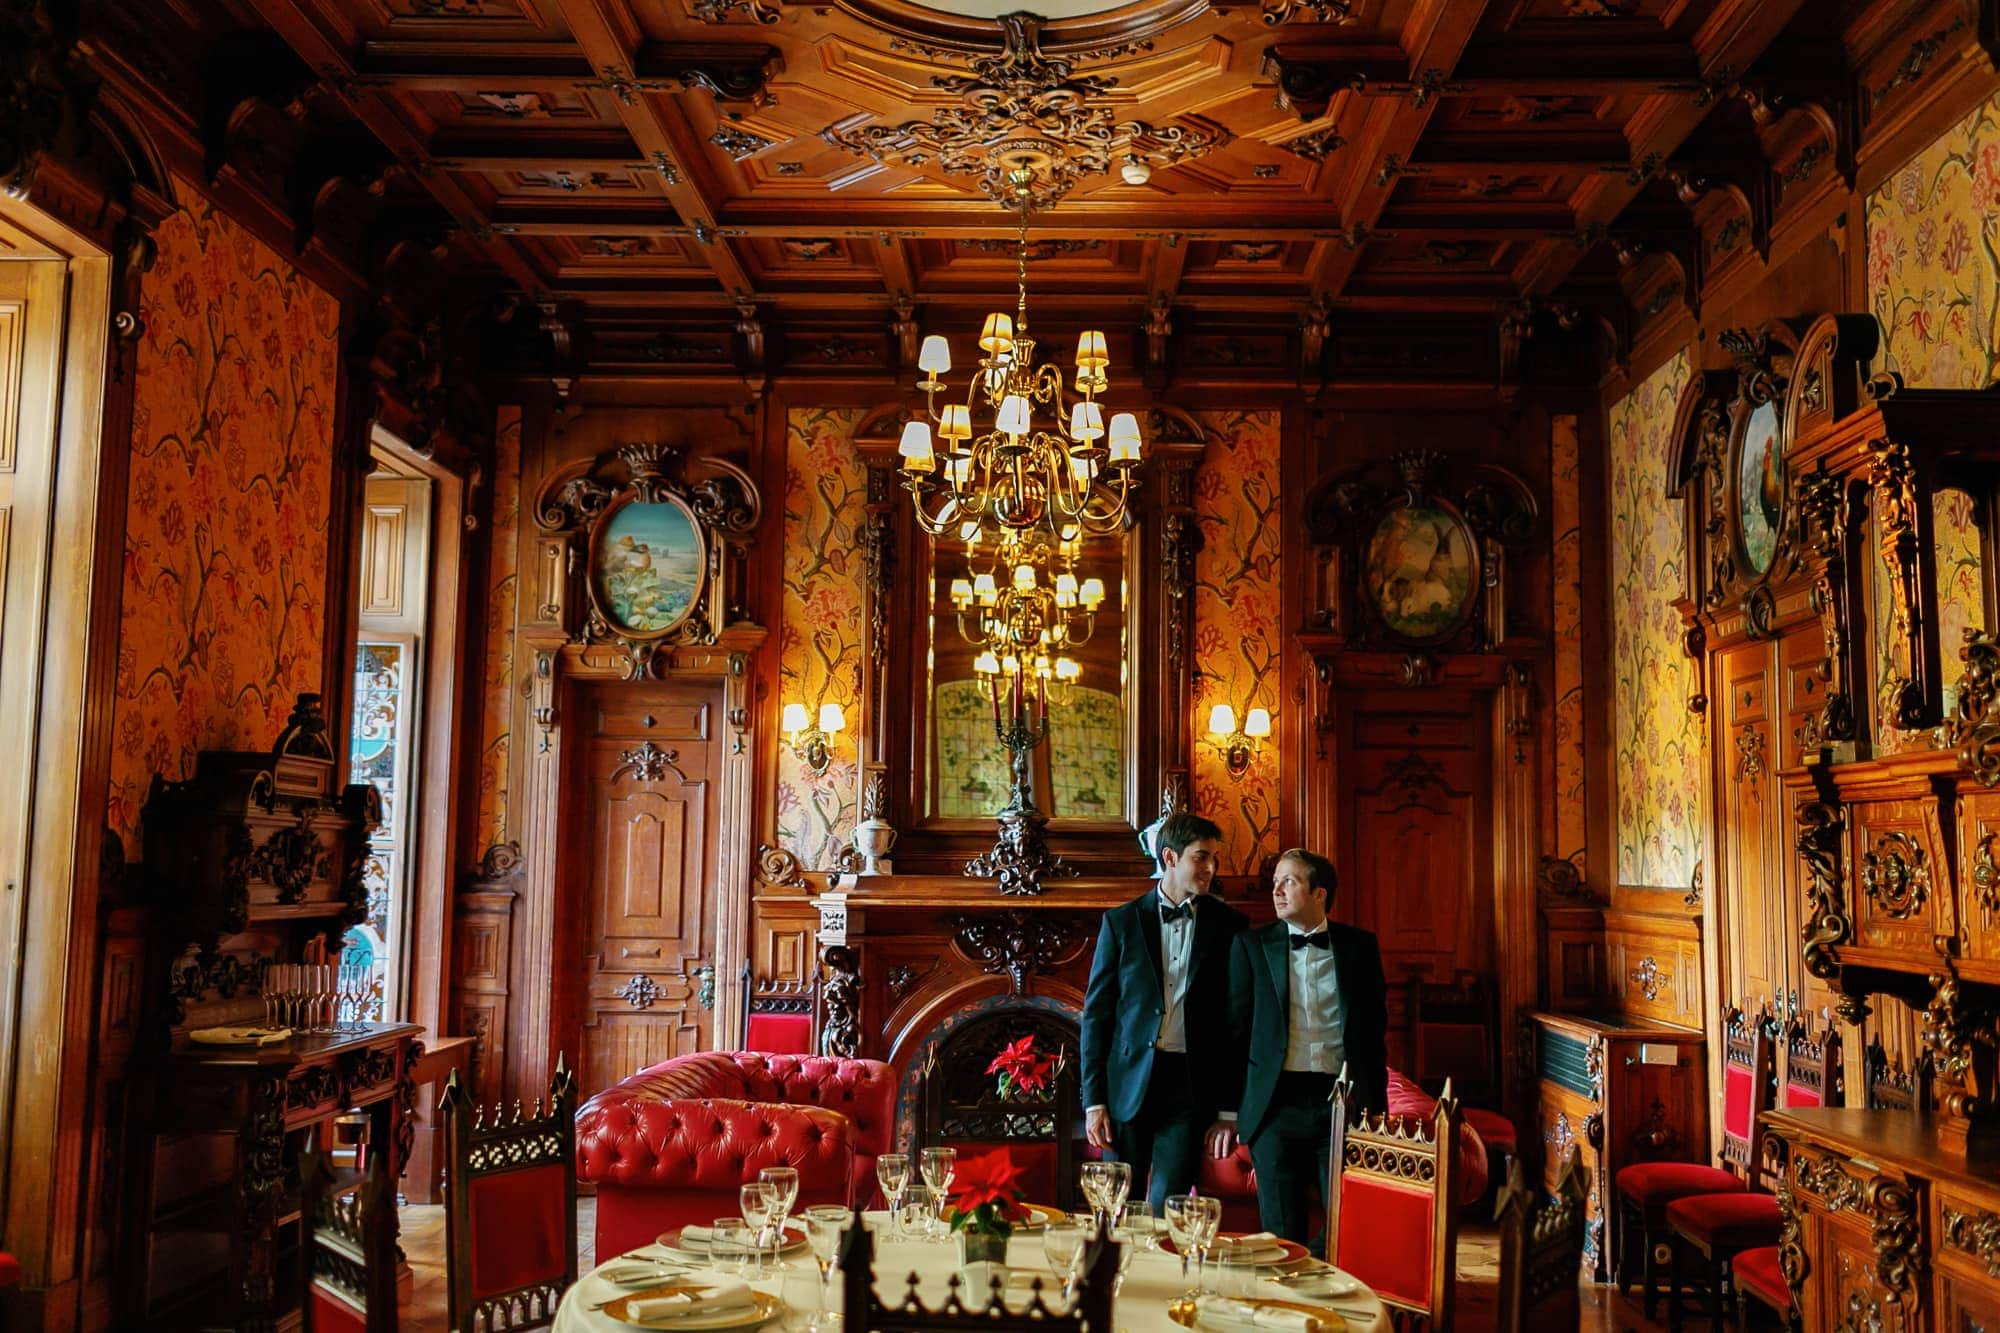 renaissance room in Pestana palace wes anderson film lisbon